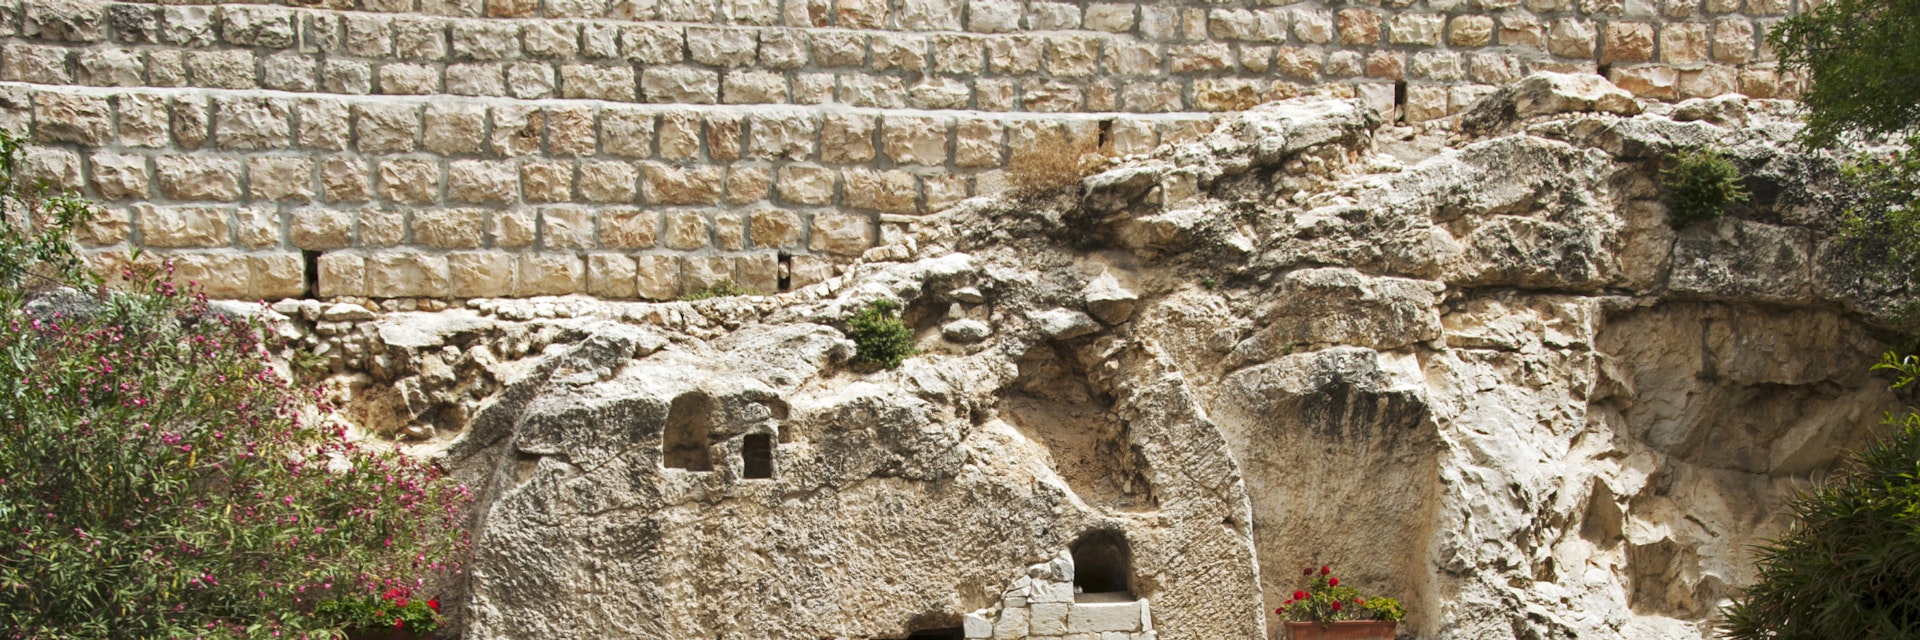 place of the resurrection of Jesus Christ in Jerusalem Israel